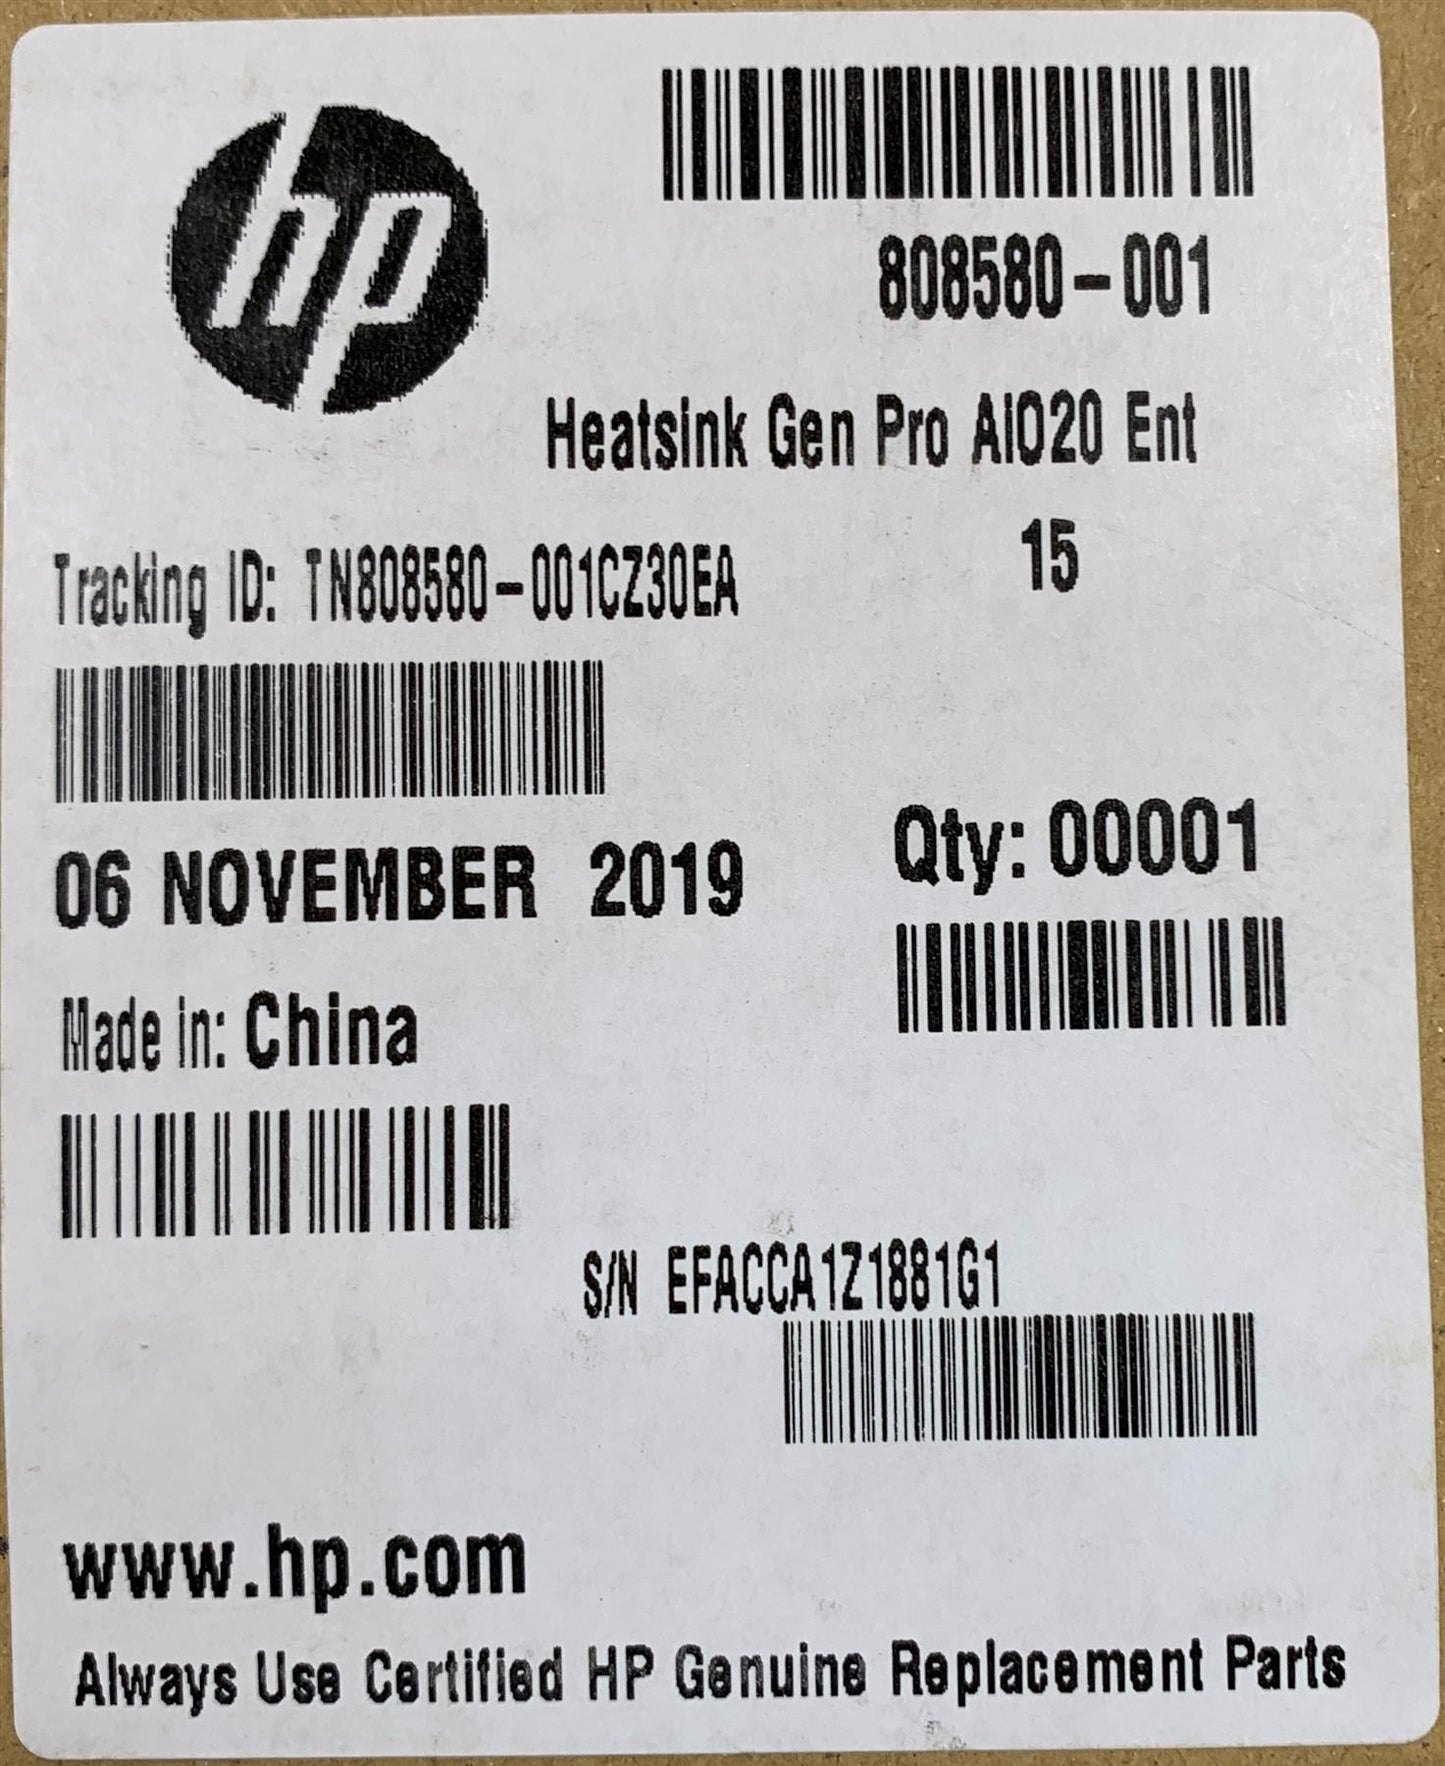 HP ProOne 400 G2 20 All in One 808580-001 CPU Processor Heatsink Cooler Cooling